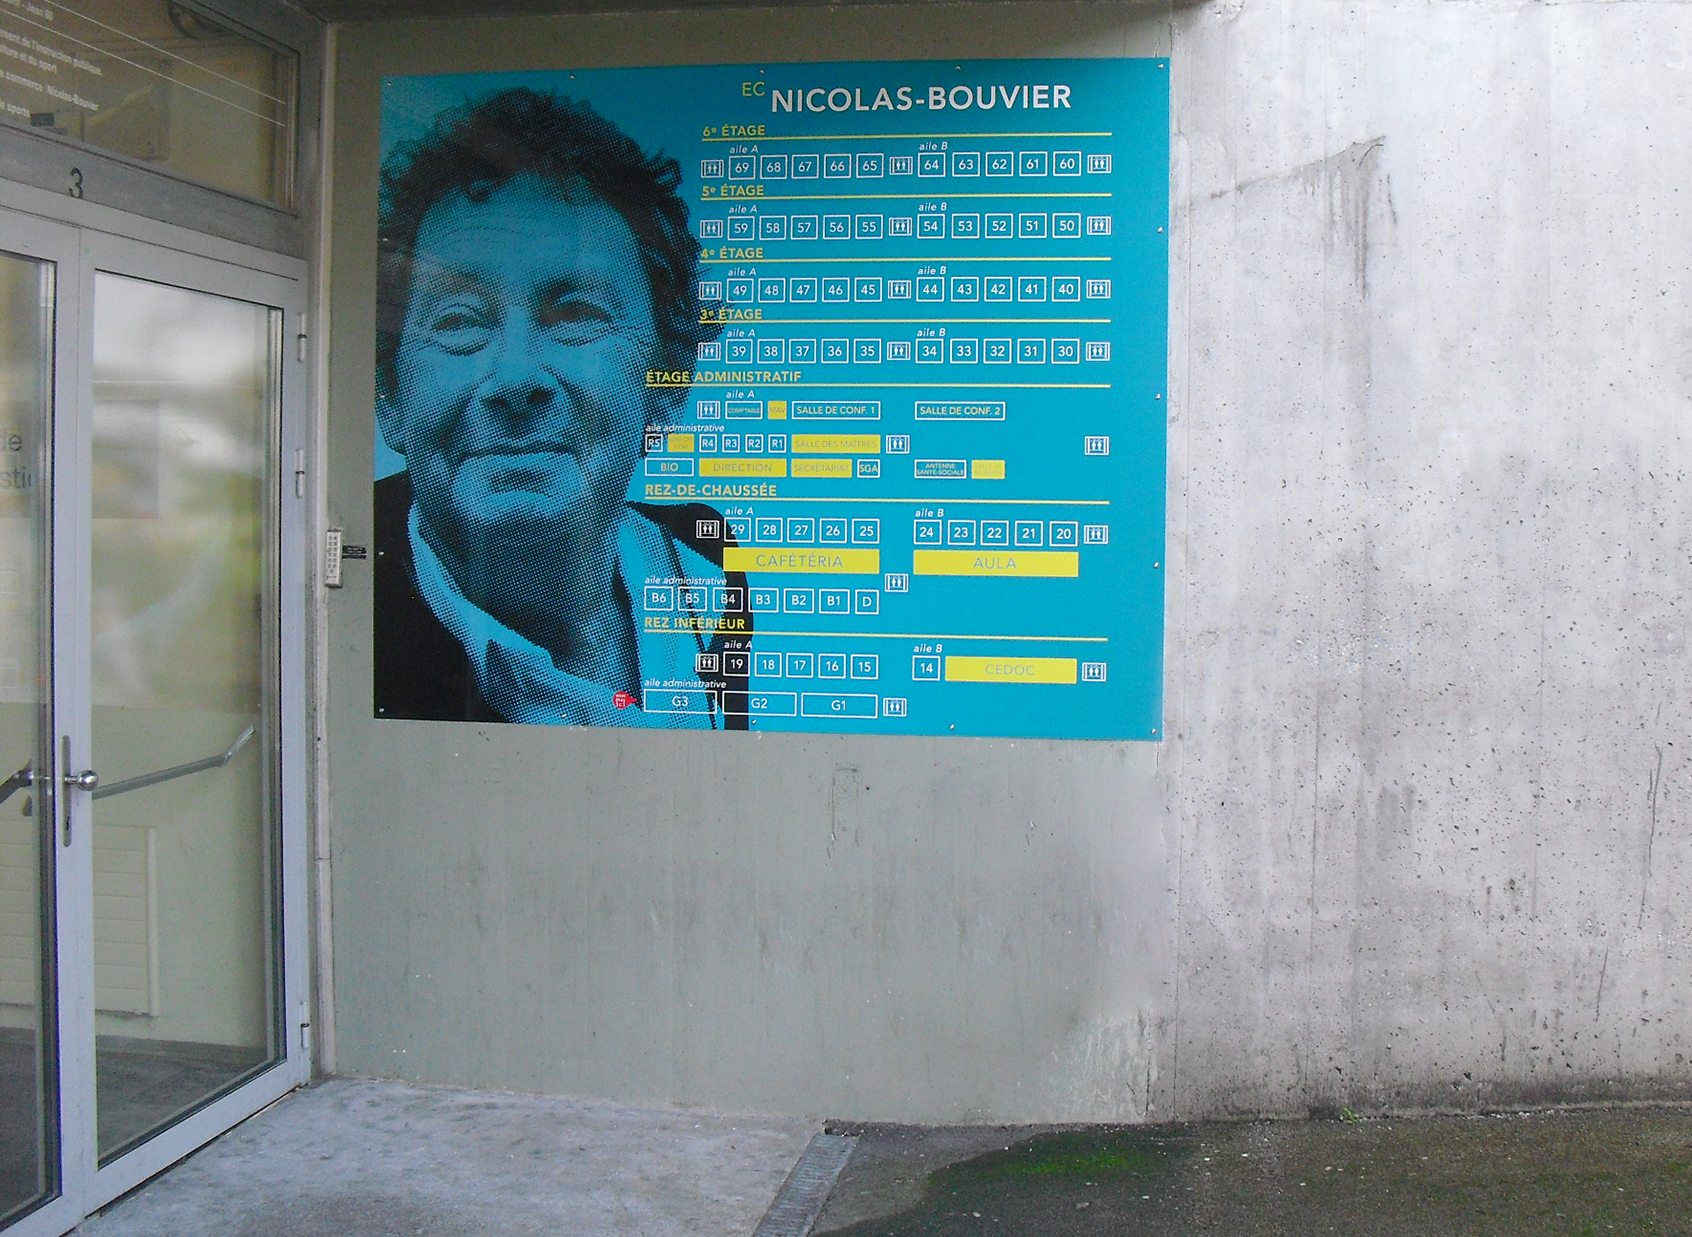 EC Nicolas-Bouvier